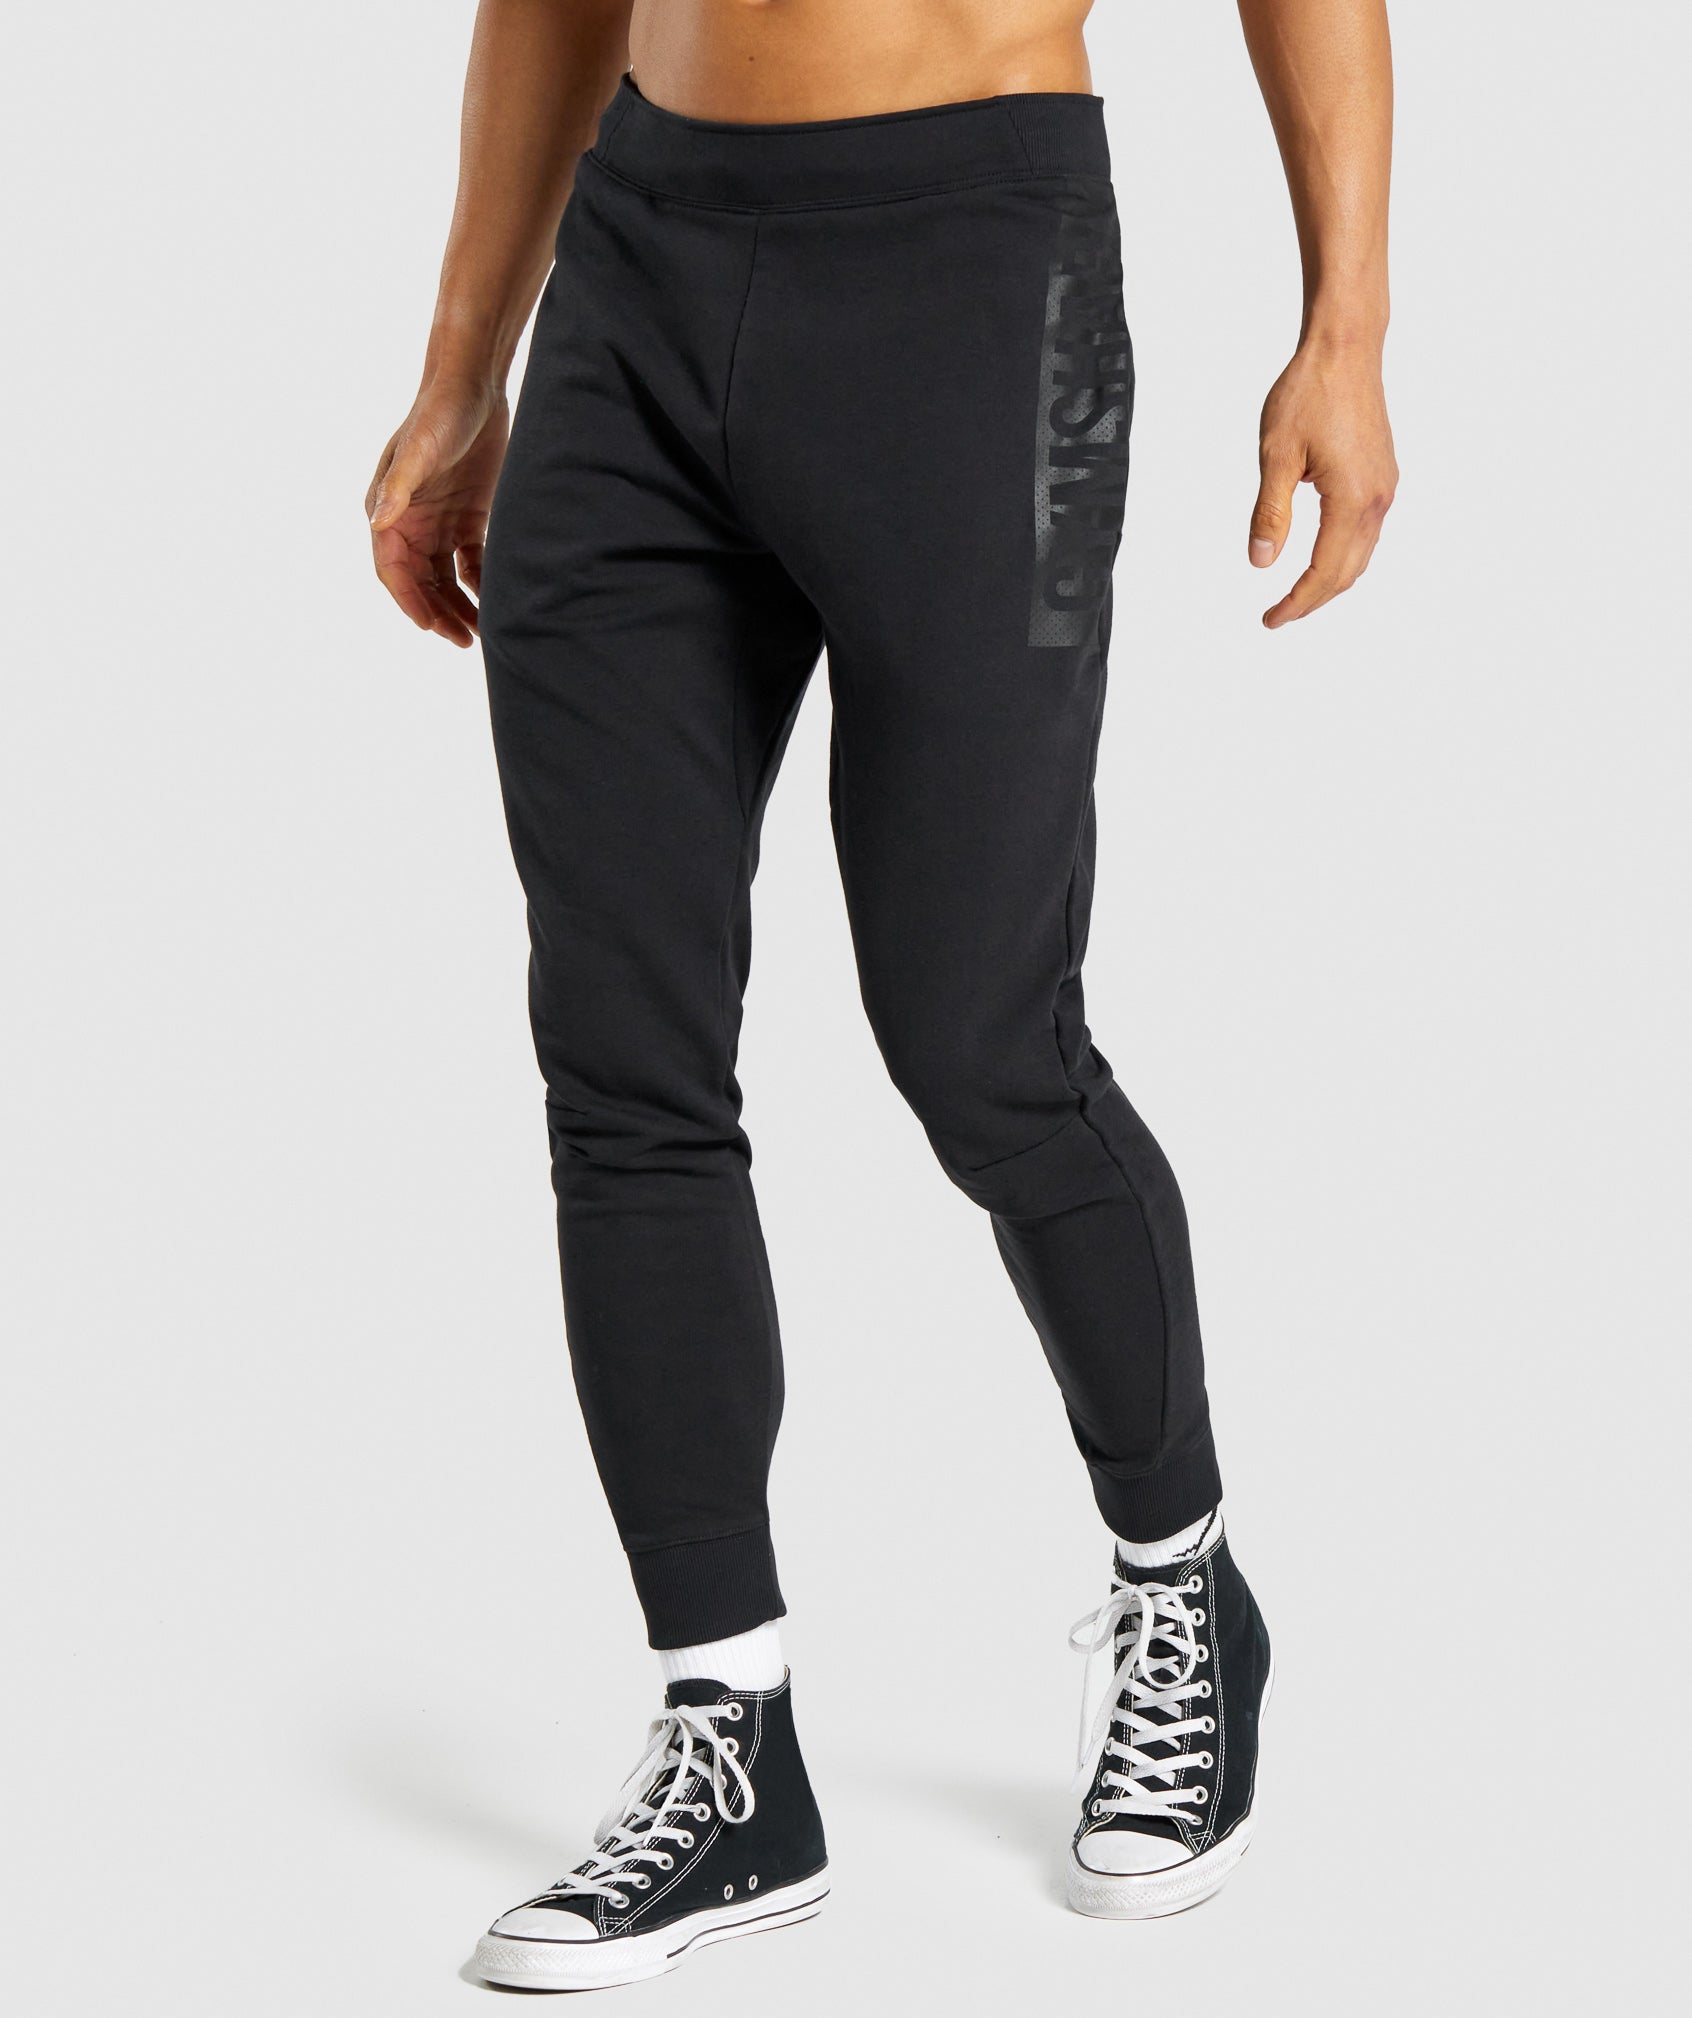 Gymshark Sport Run Pants - Black